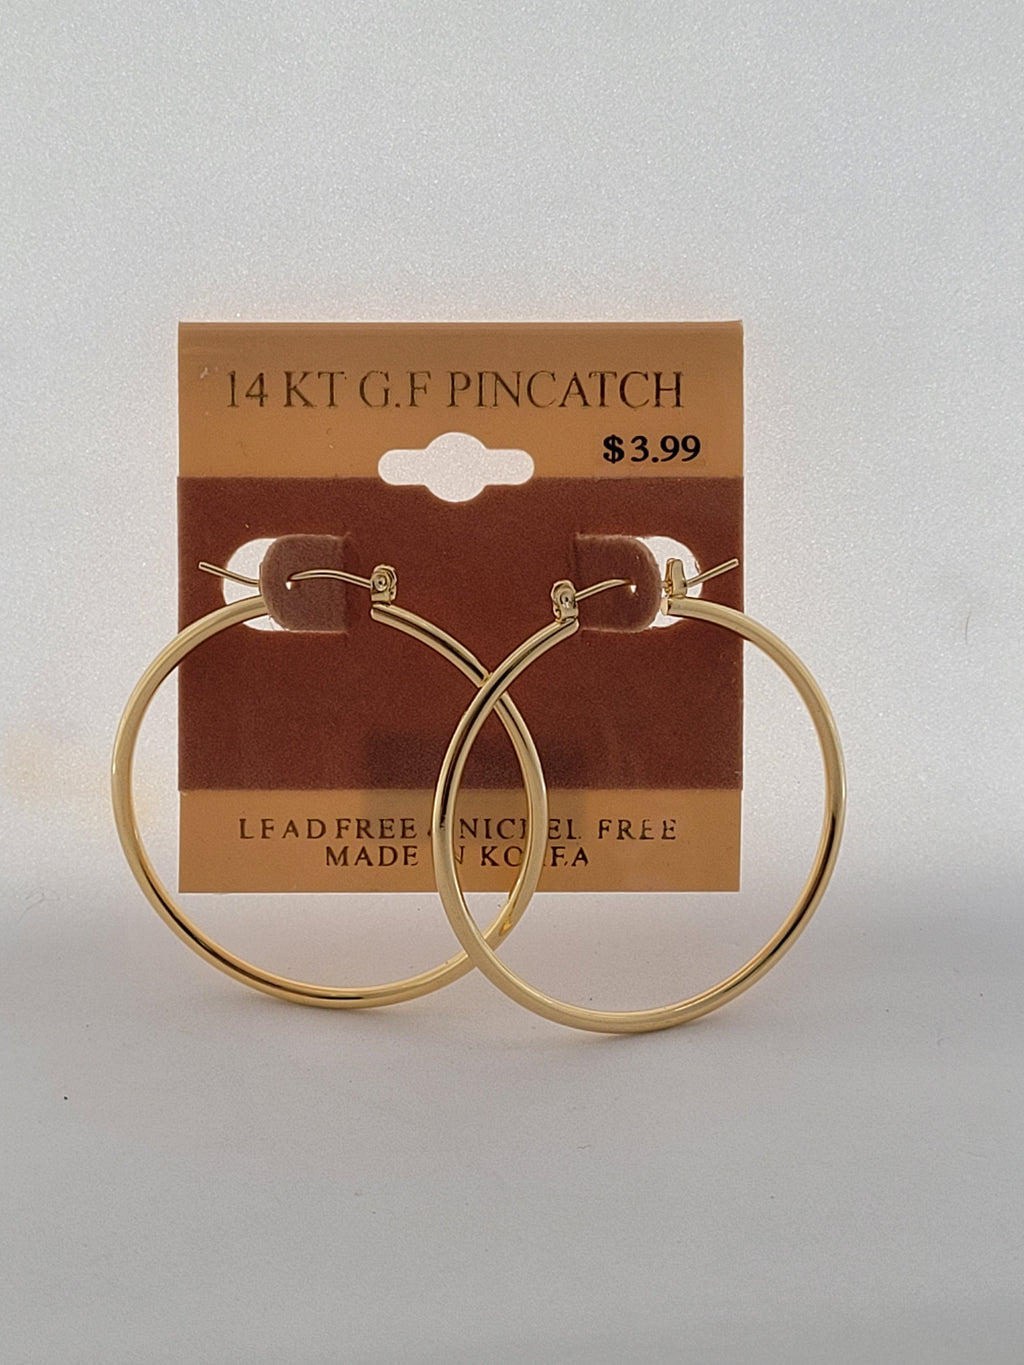 14 KT G.F Pincatch Gold Earring 350340